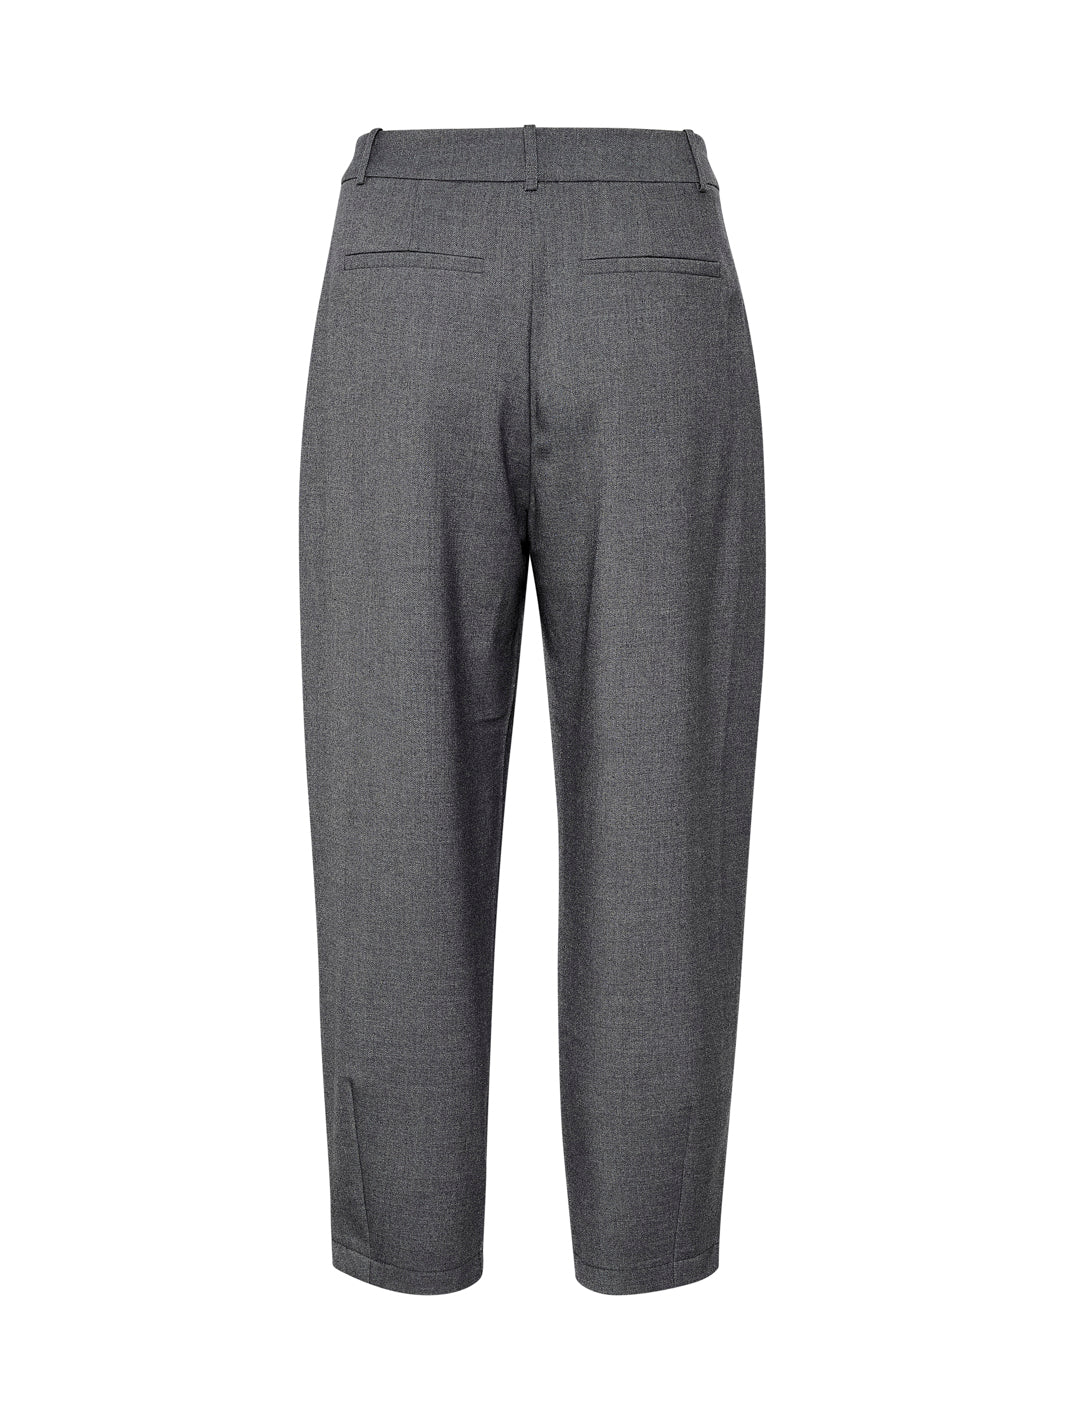 Kaffe KAmerle pants suiting dark grey melange - Online-Mode